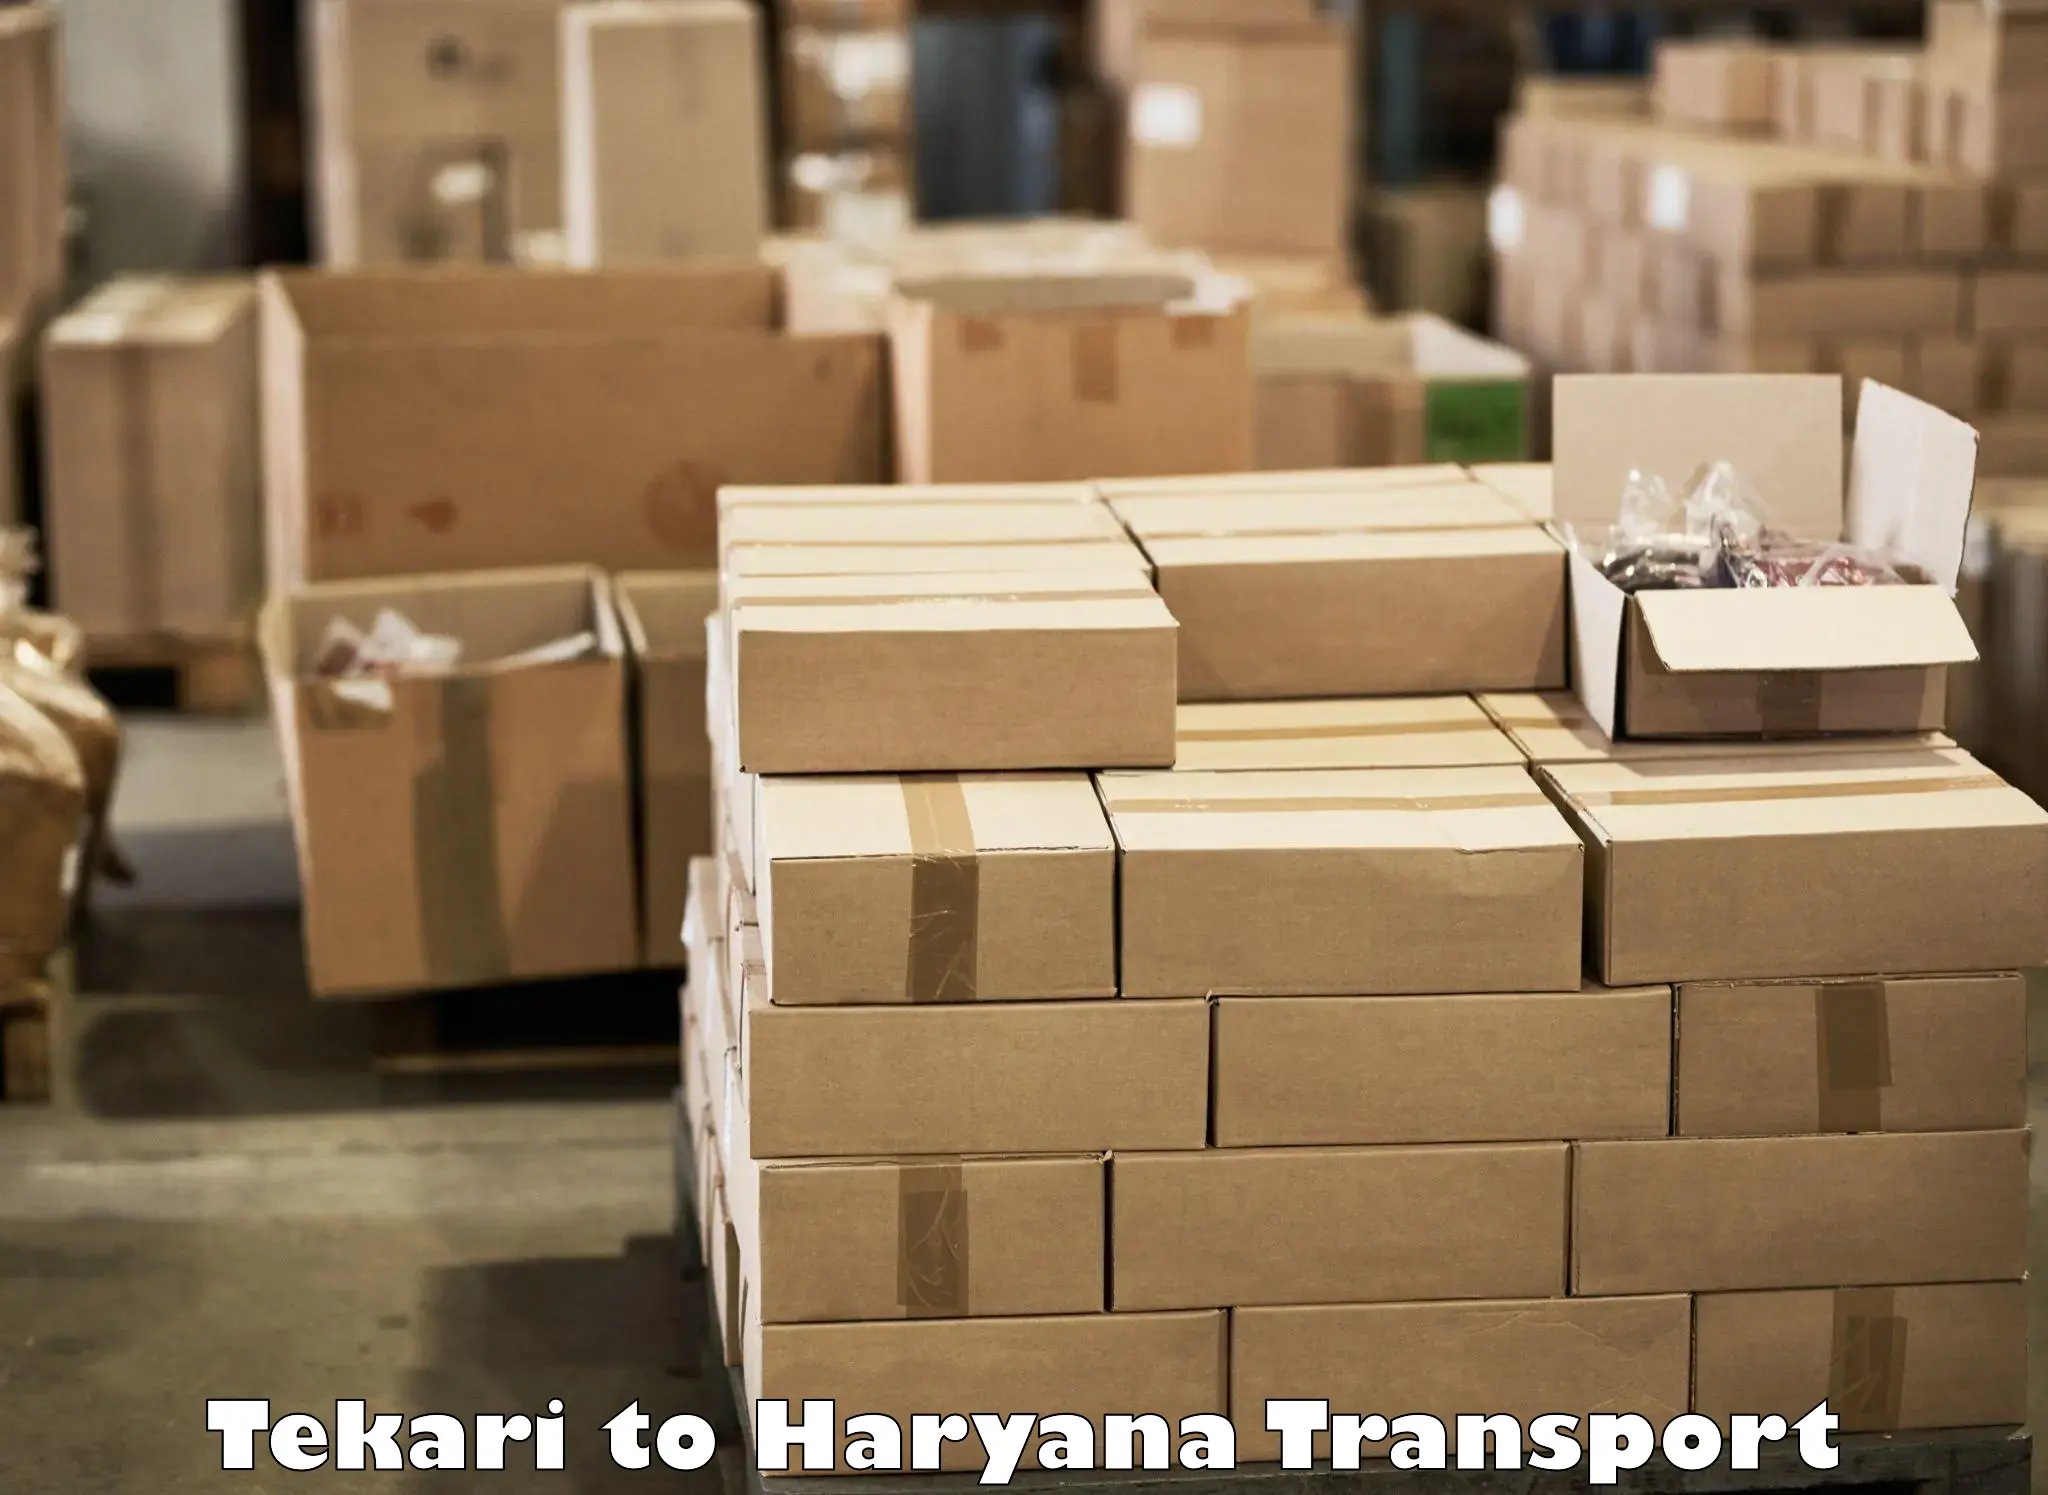 Nearest transport service Tekari to Gurugram